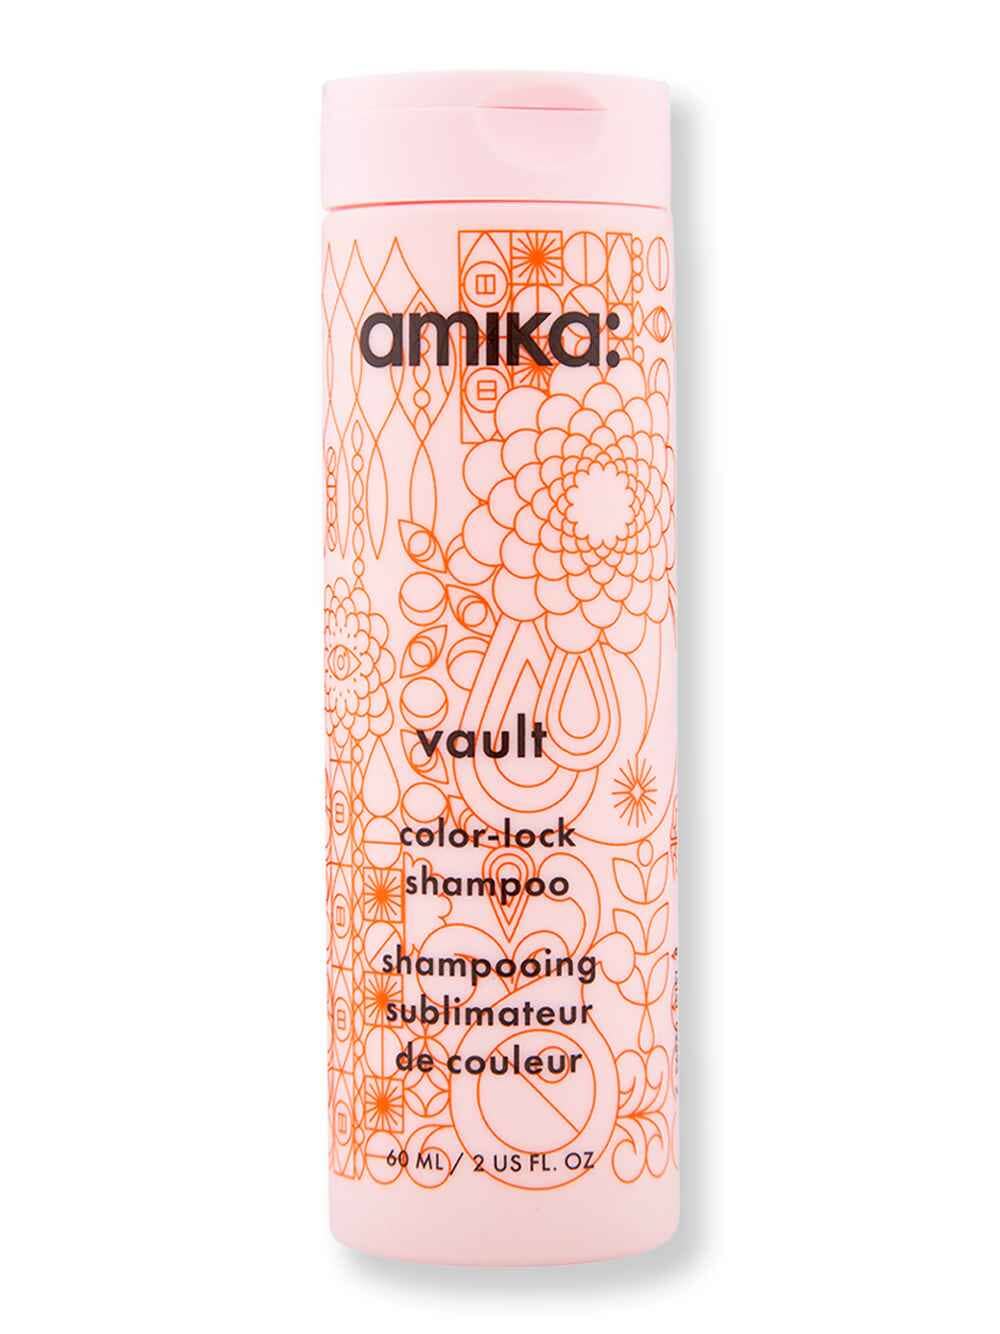 Amika Amika Vault Color-Lock Shampoo 2.03 oz60 ml Shampoos 